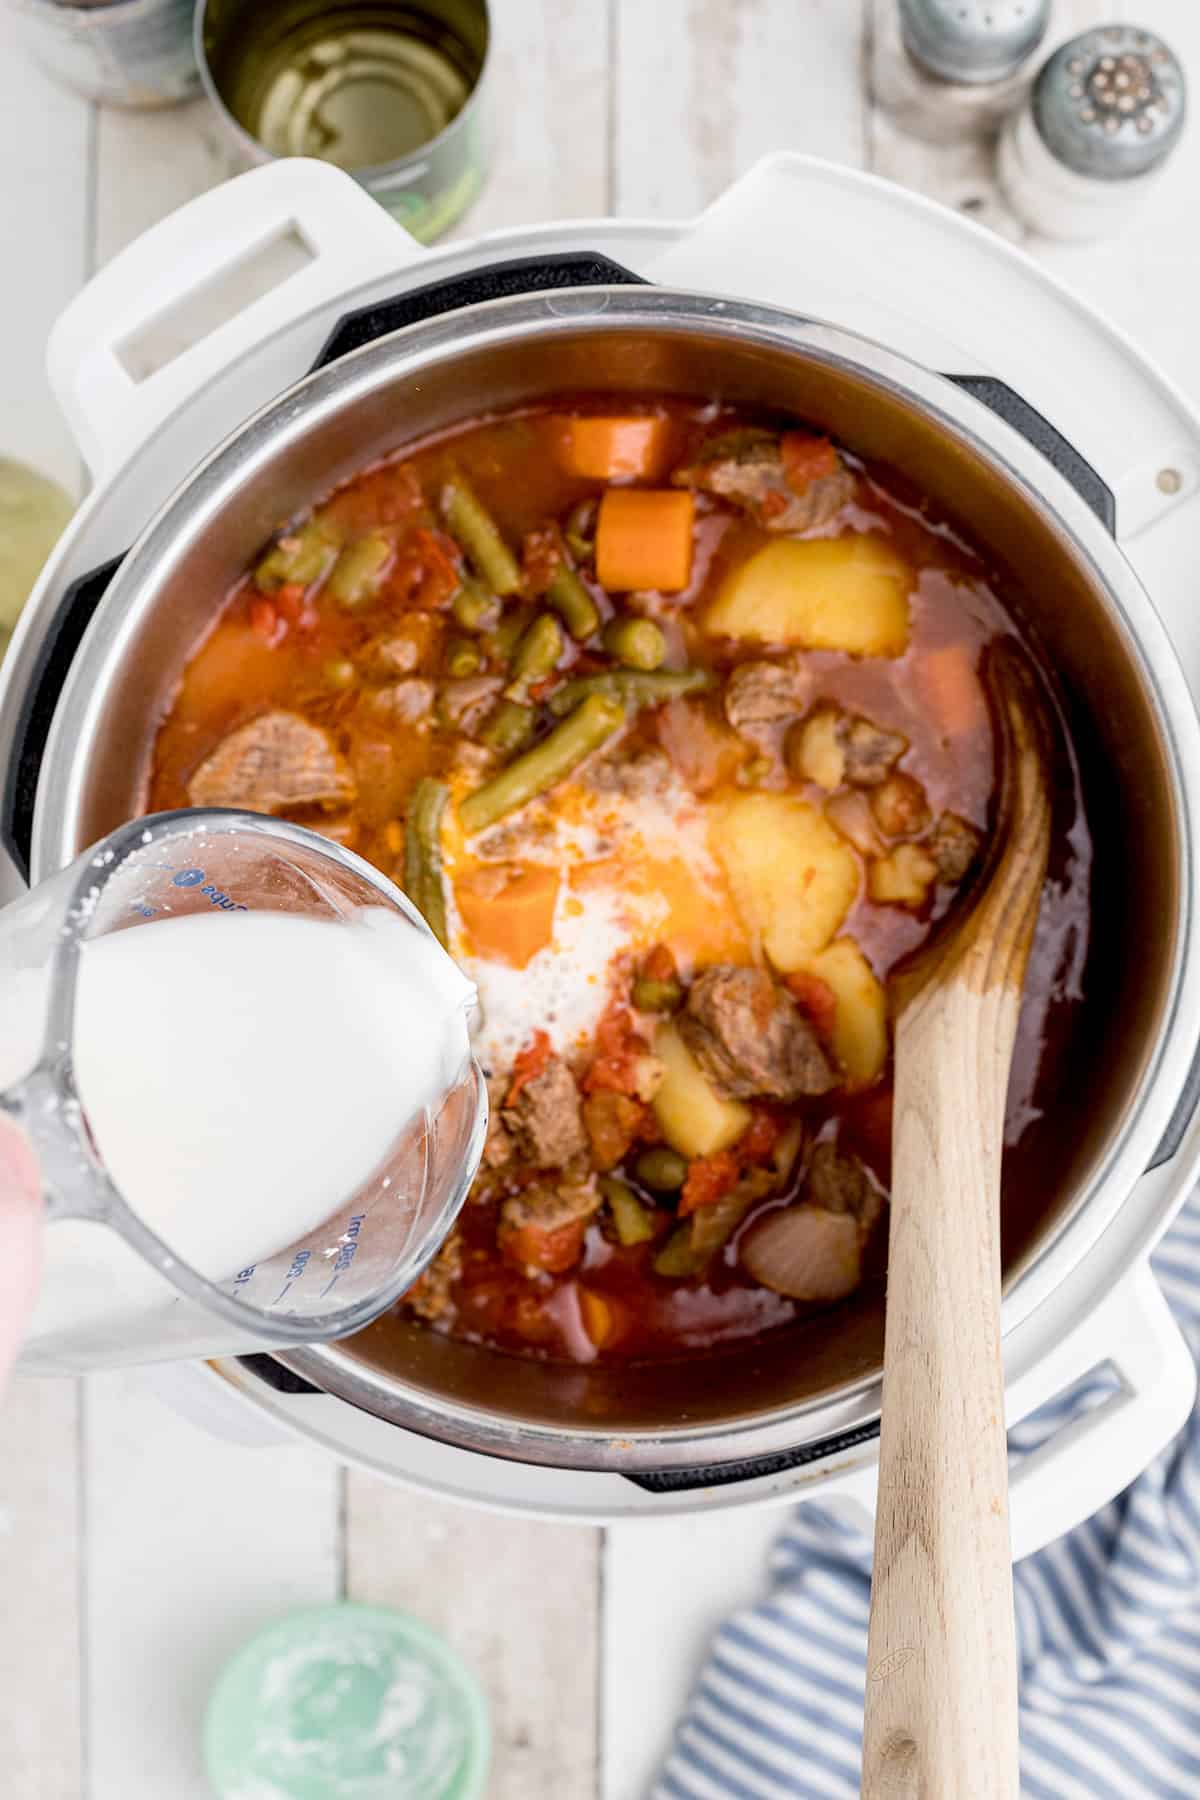 Adding cornstarch slurry to cooked stew,